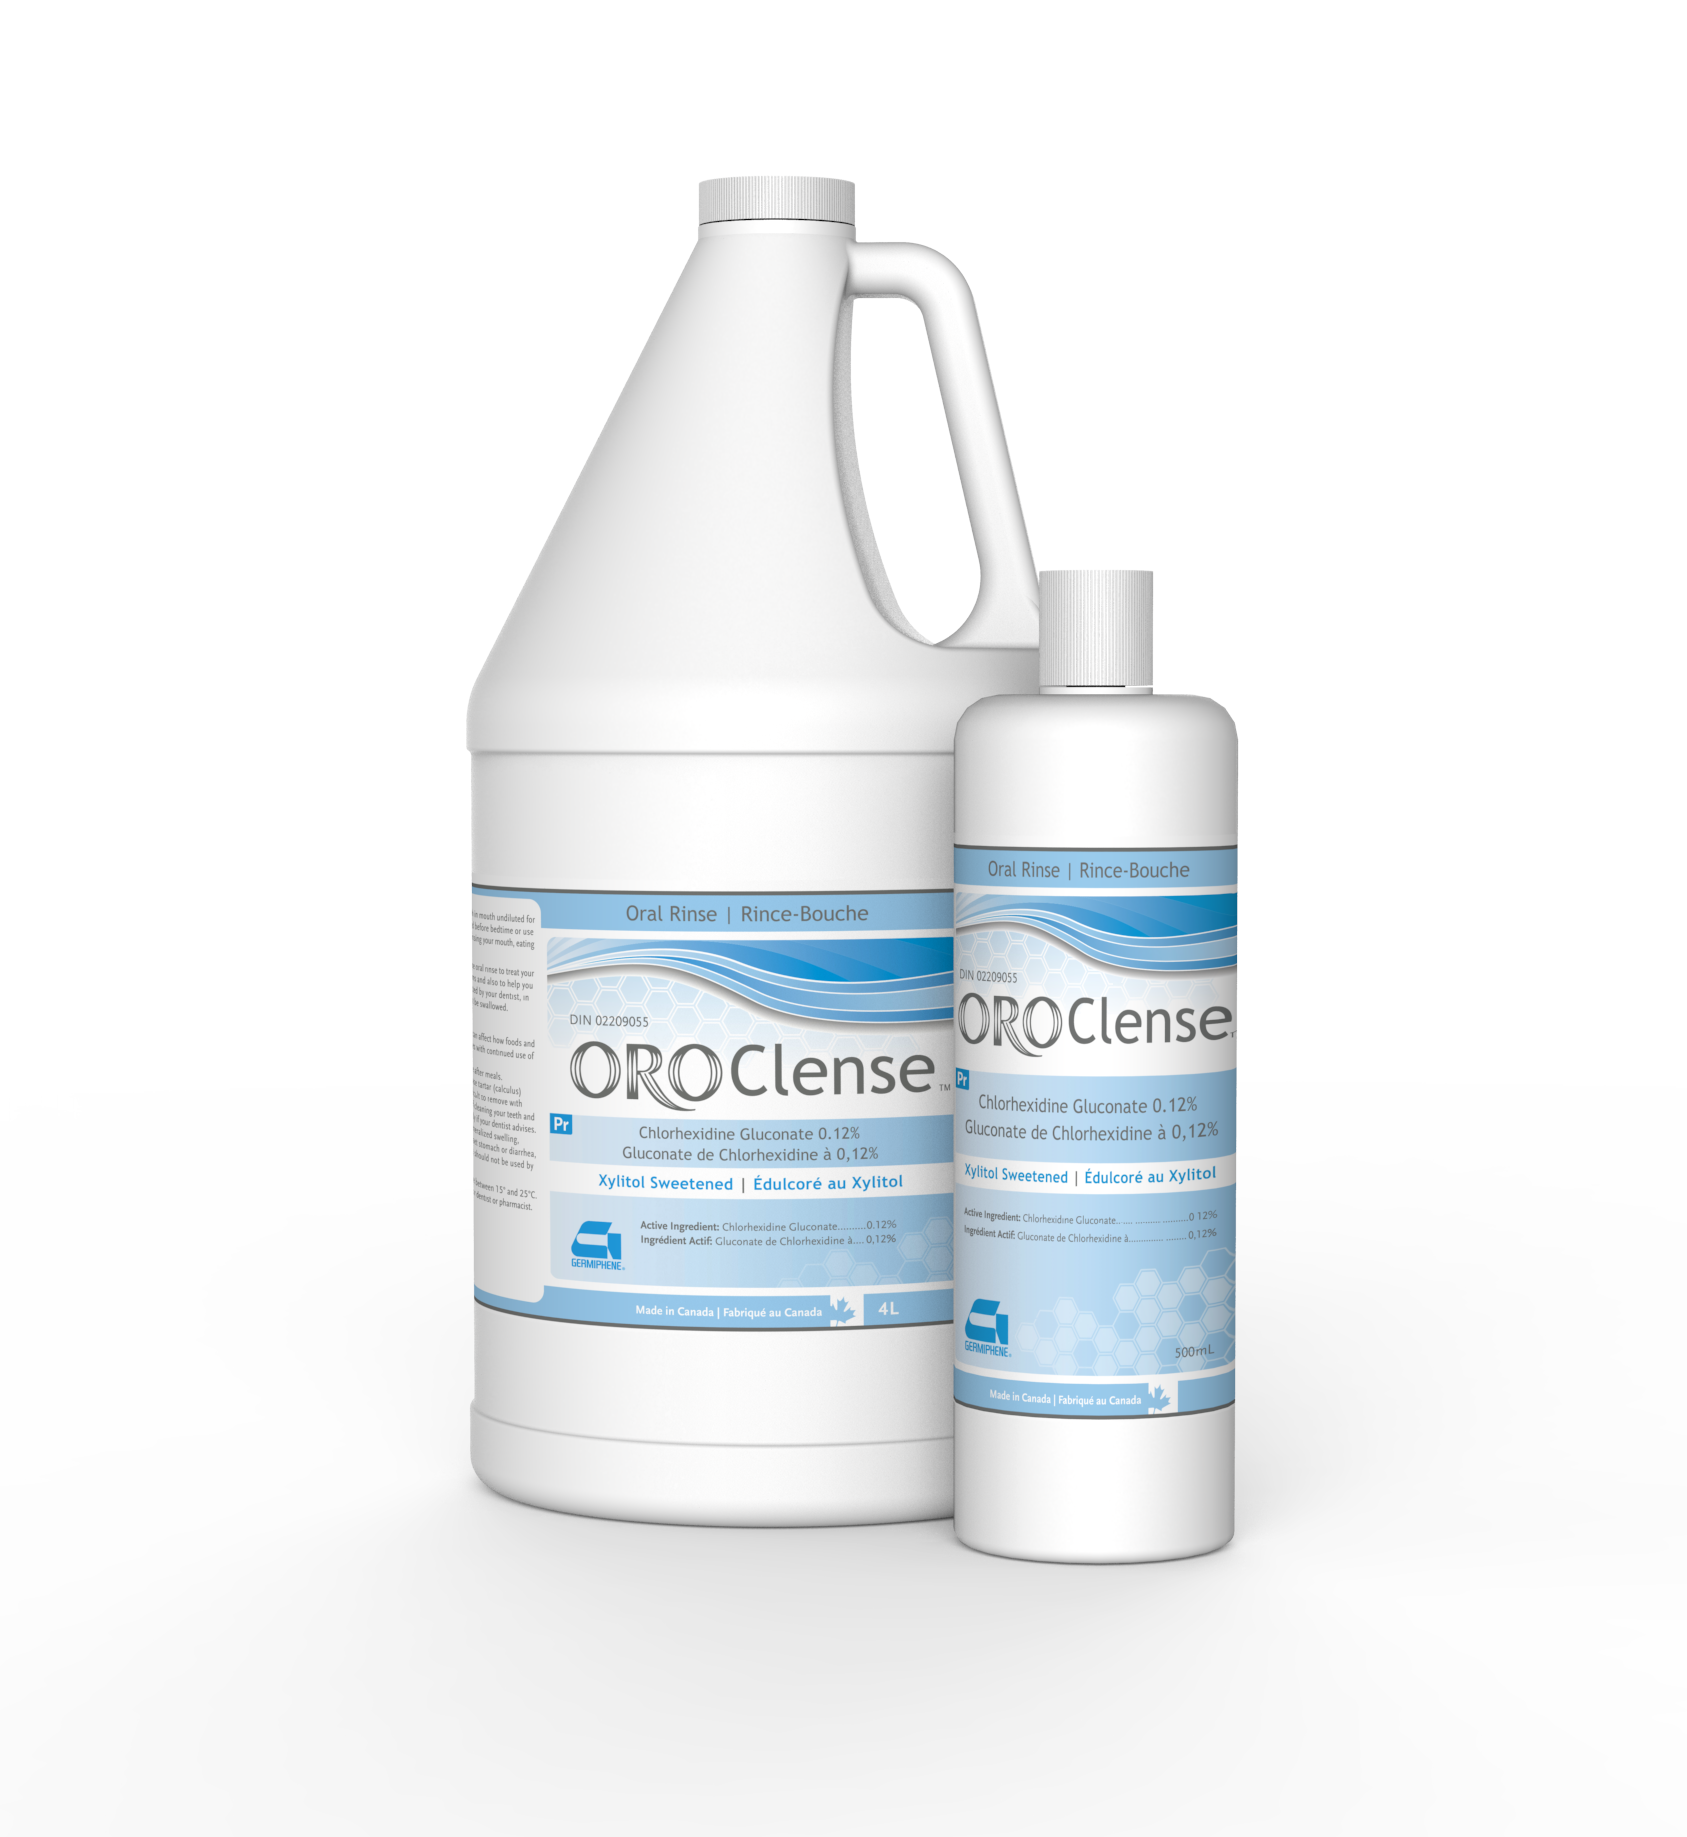 ORO Clense 0.12% Chlorhexidine Gluconate Oral Rinse